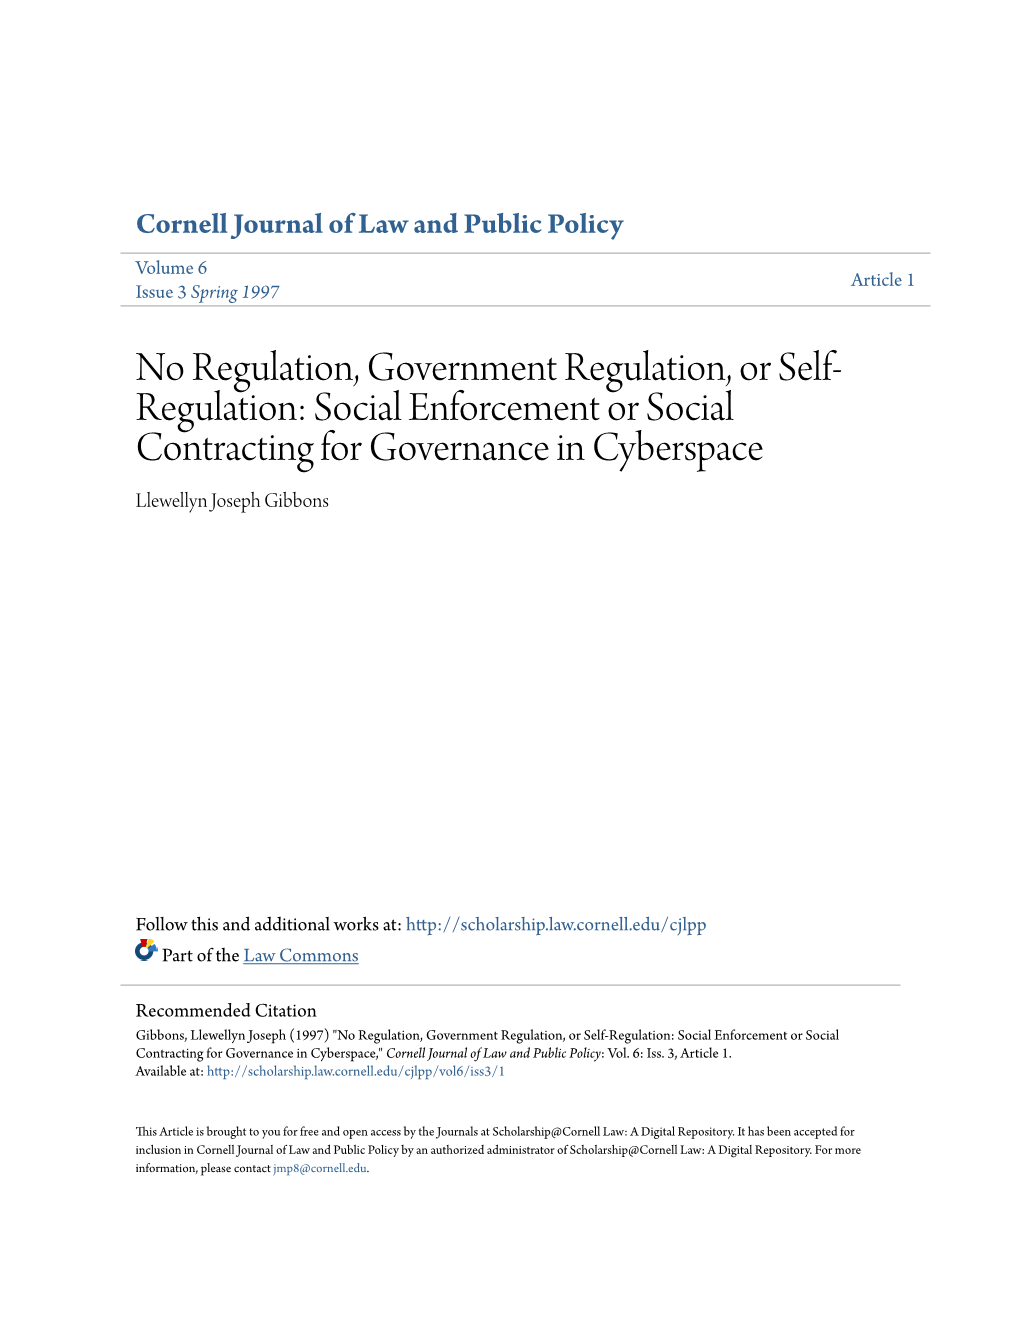 No Regulation, Government Regulation, Or Self-Regulation